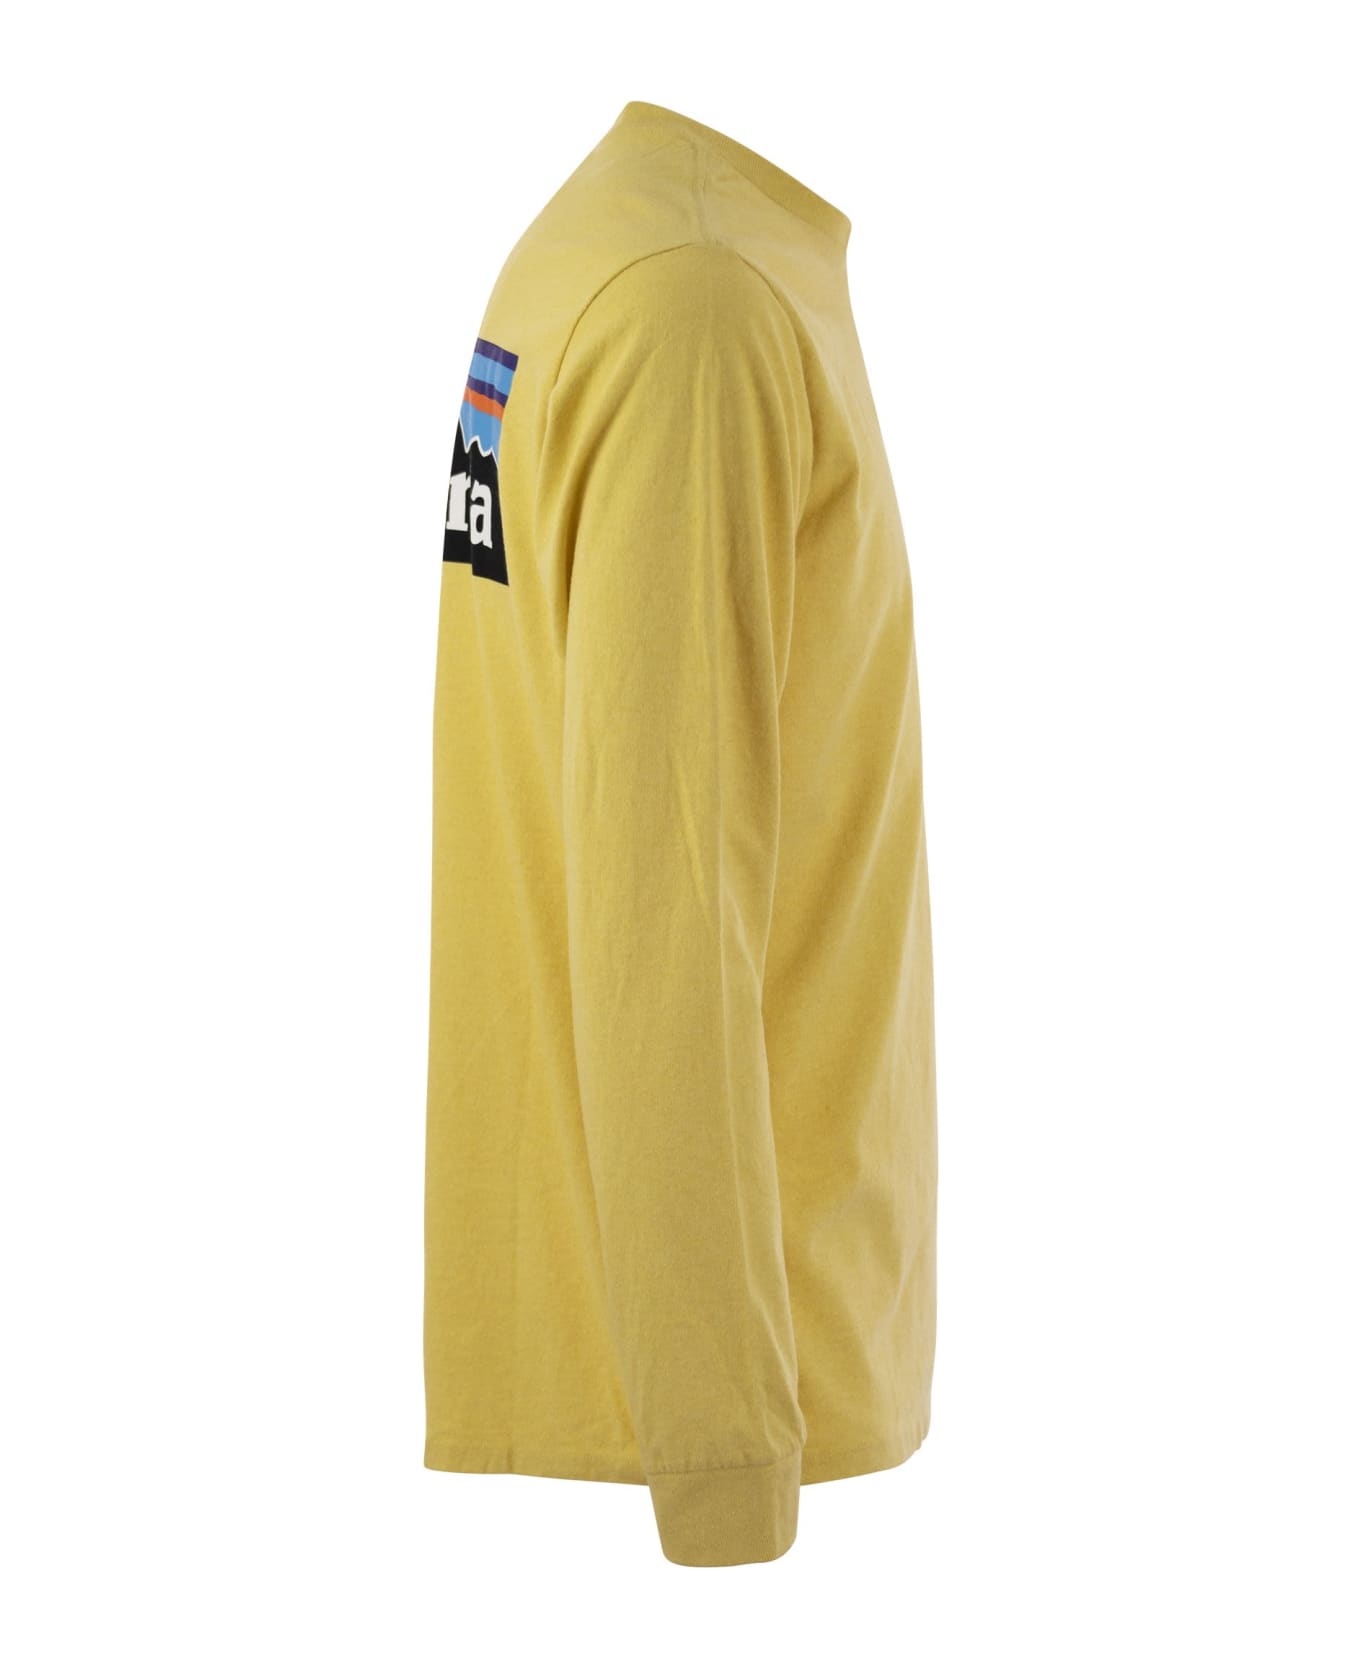 Patagonia T-shirt With Logo Long Sleeves - Yellow シャツ